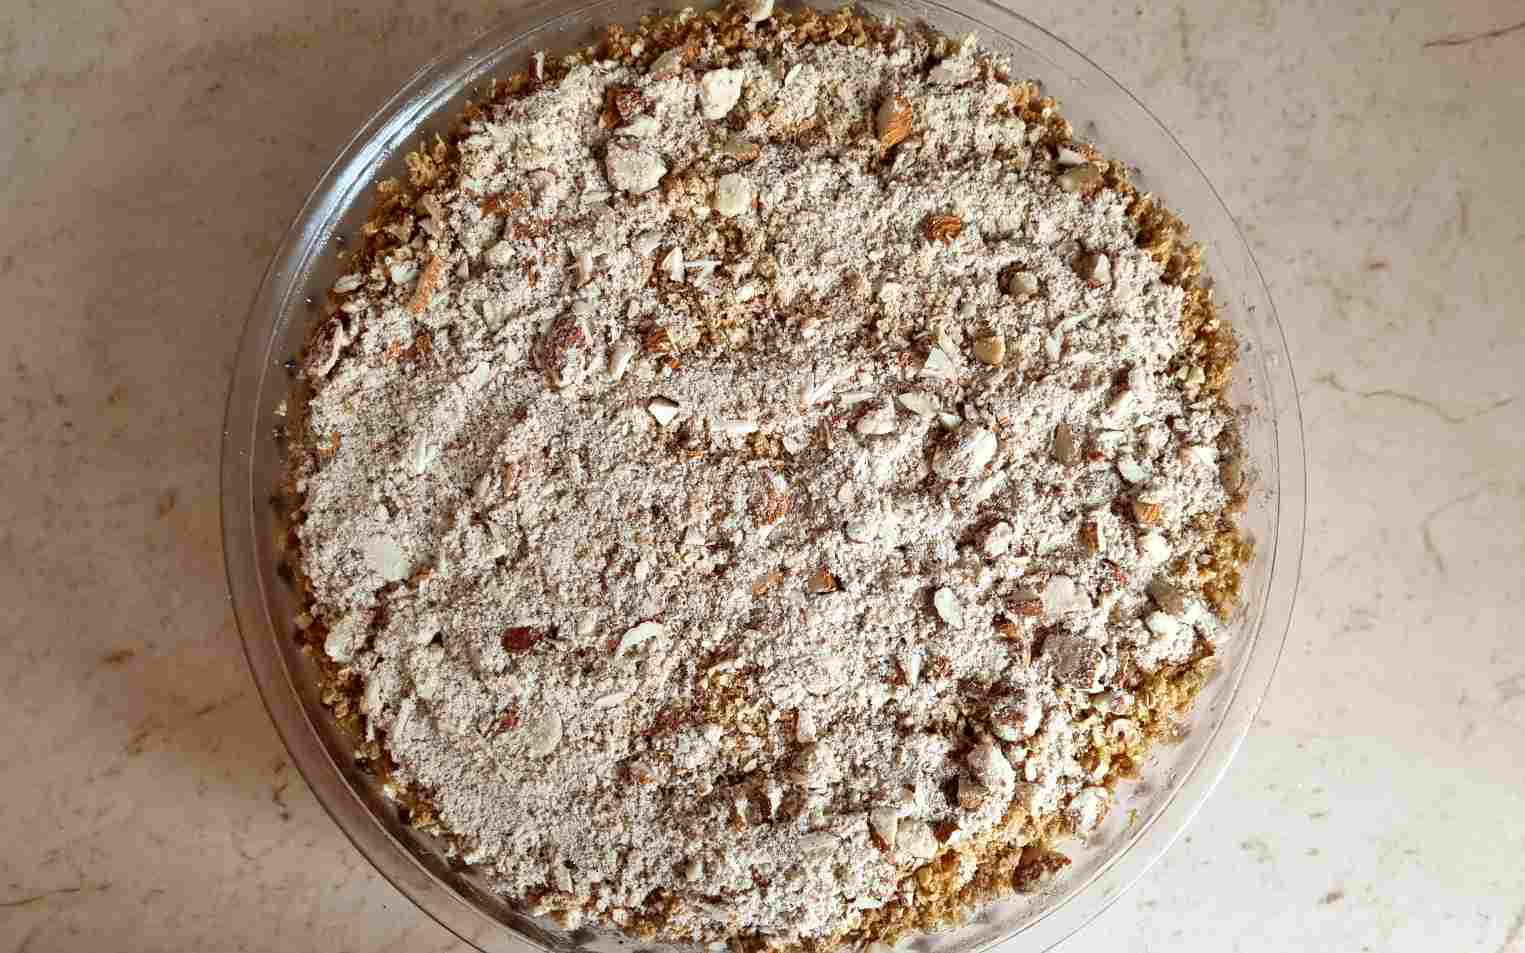 assembling the gluten free cherry crumble - almonds